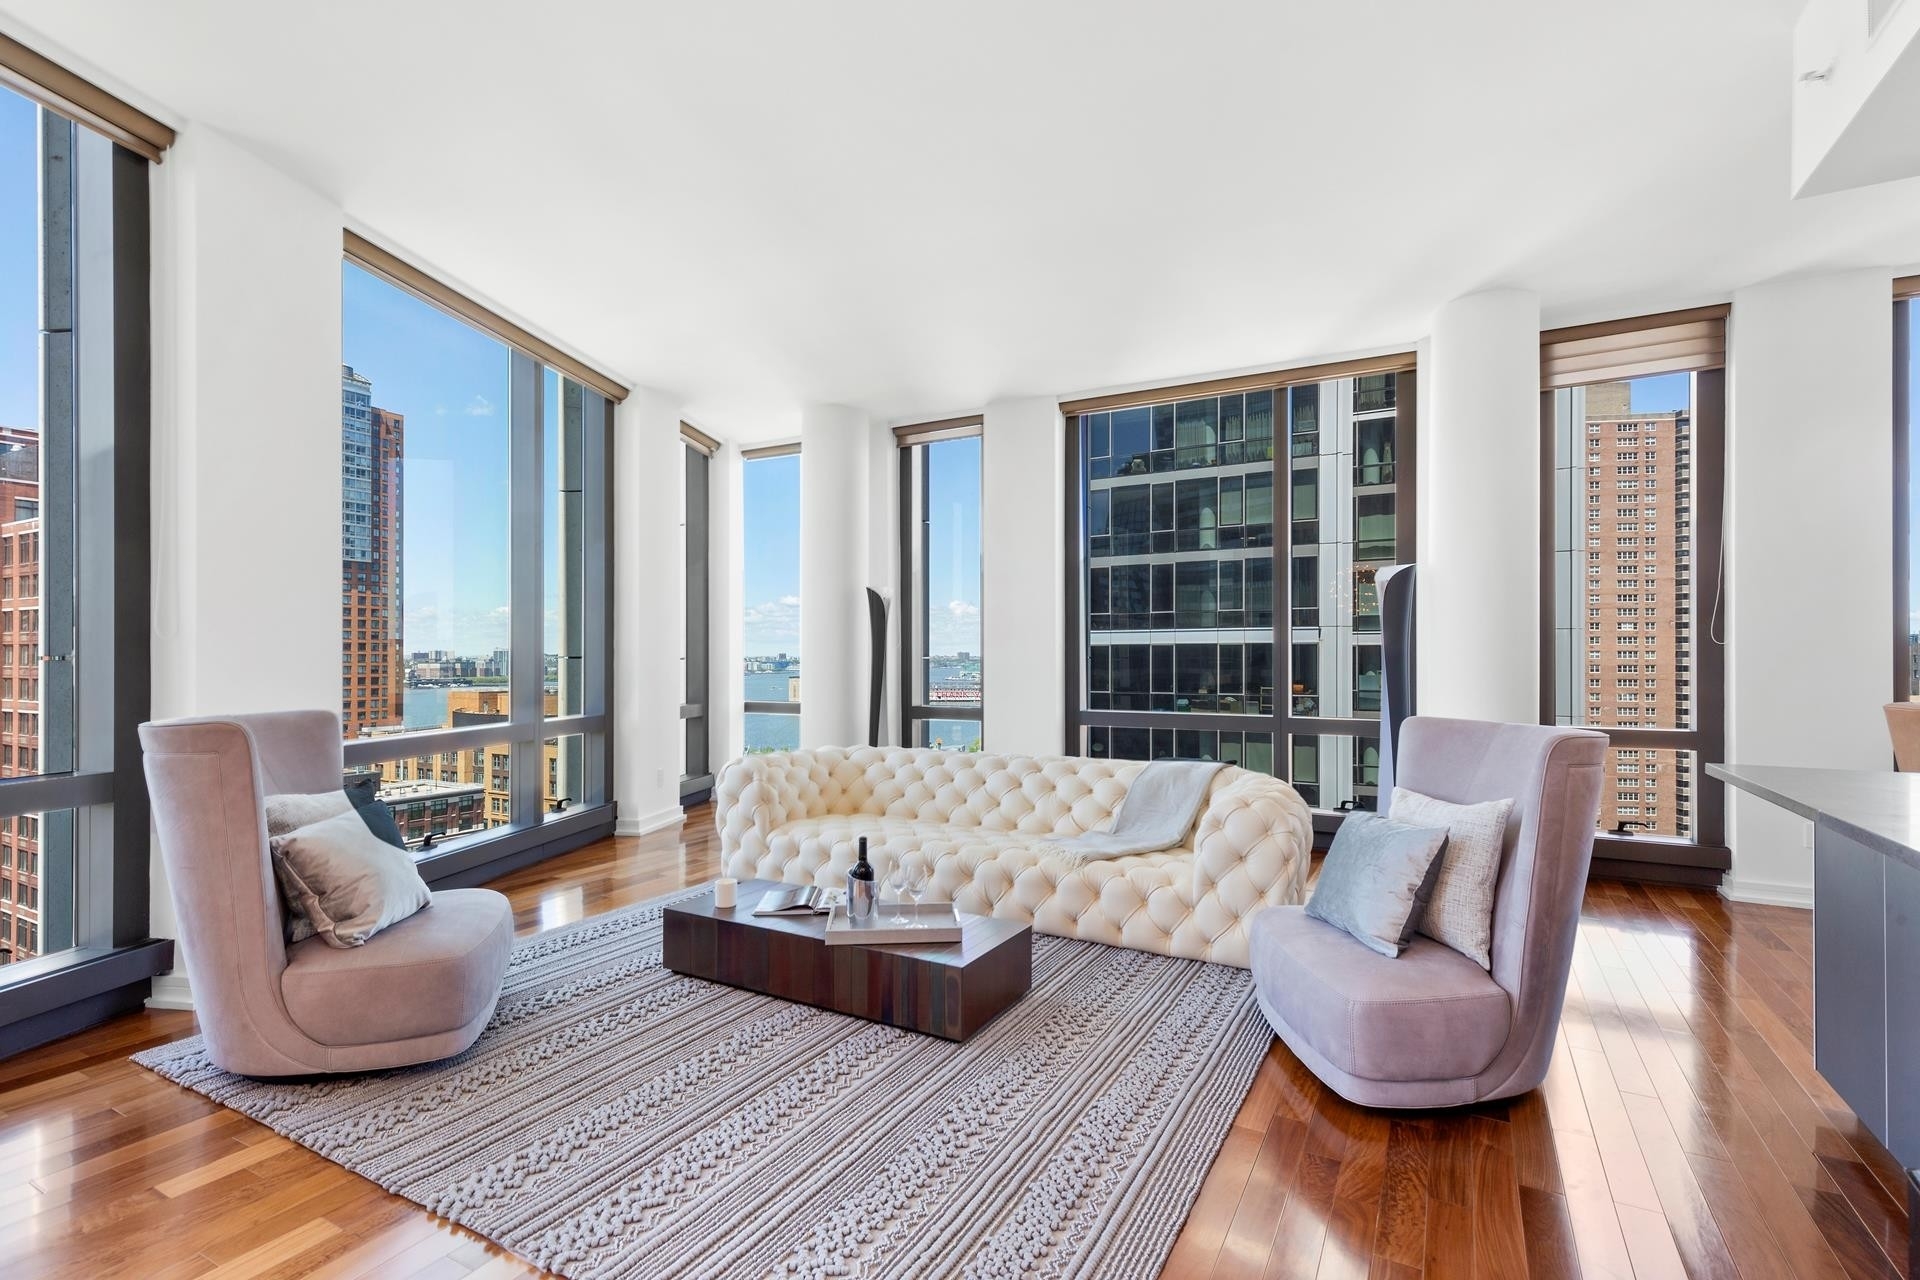 Condominium at 101 WARREN ST , 2020 New York